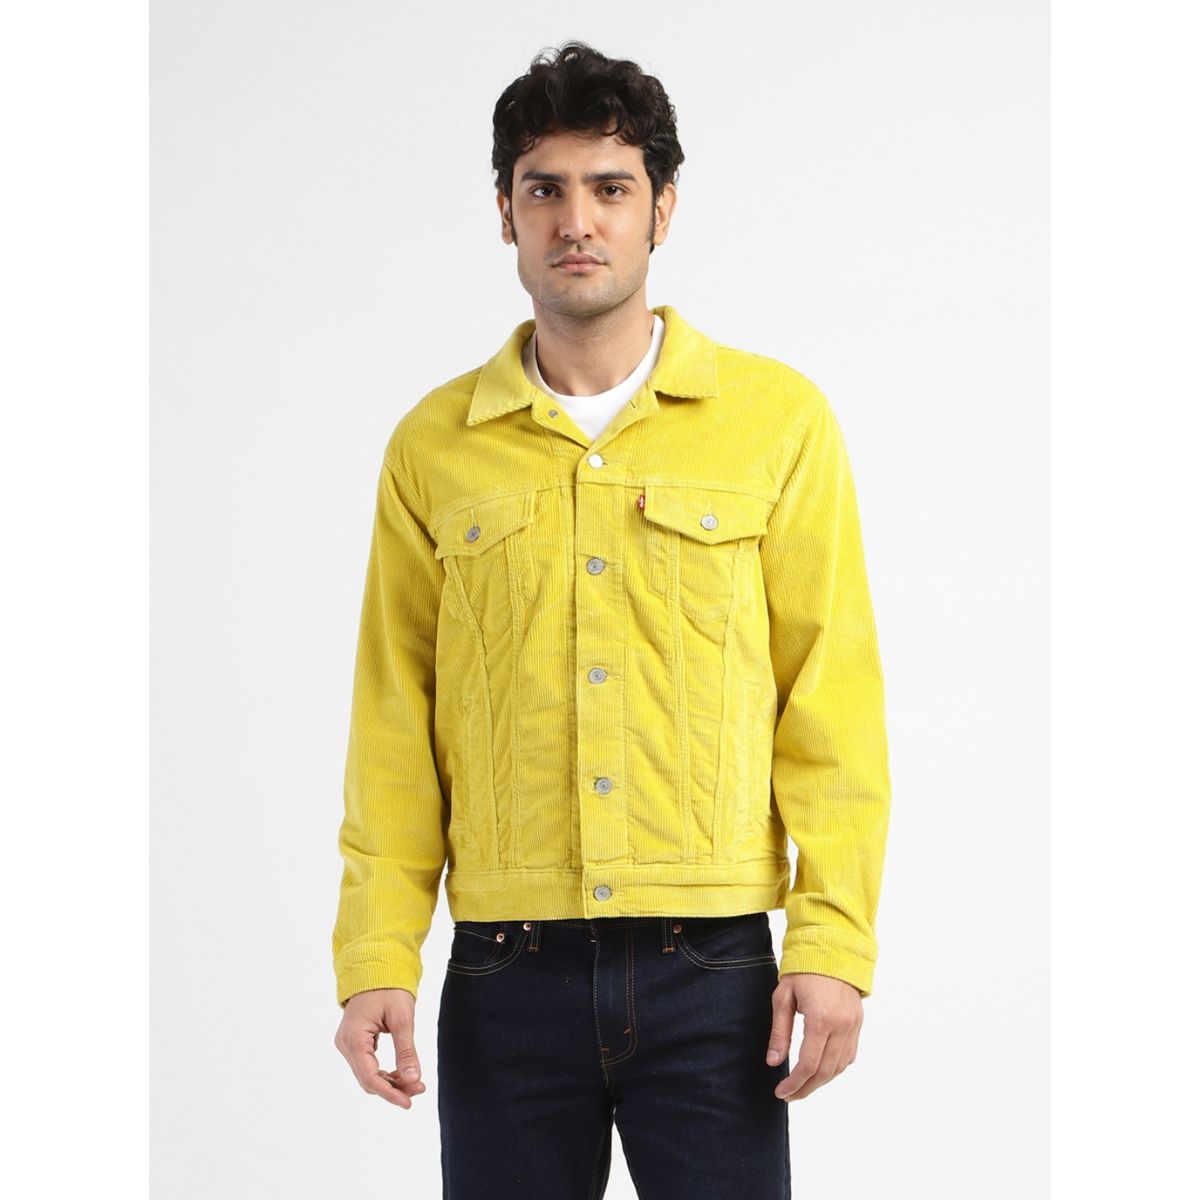 Cargo Denim Shirt Yellow at Rs 980 | Surat| ID: 2849205731862